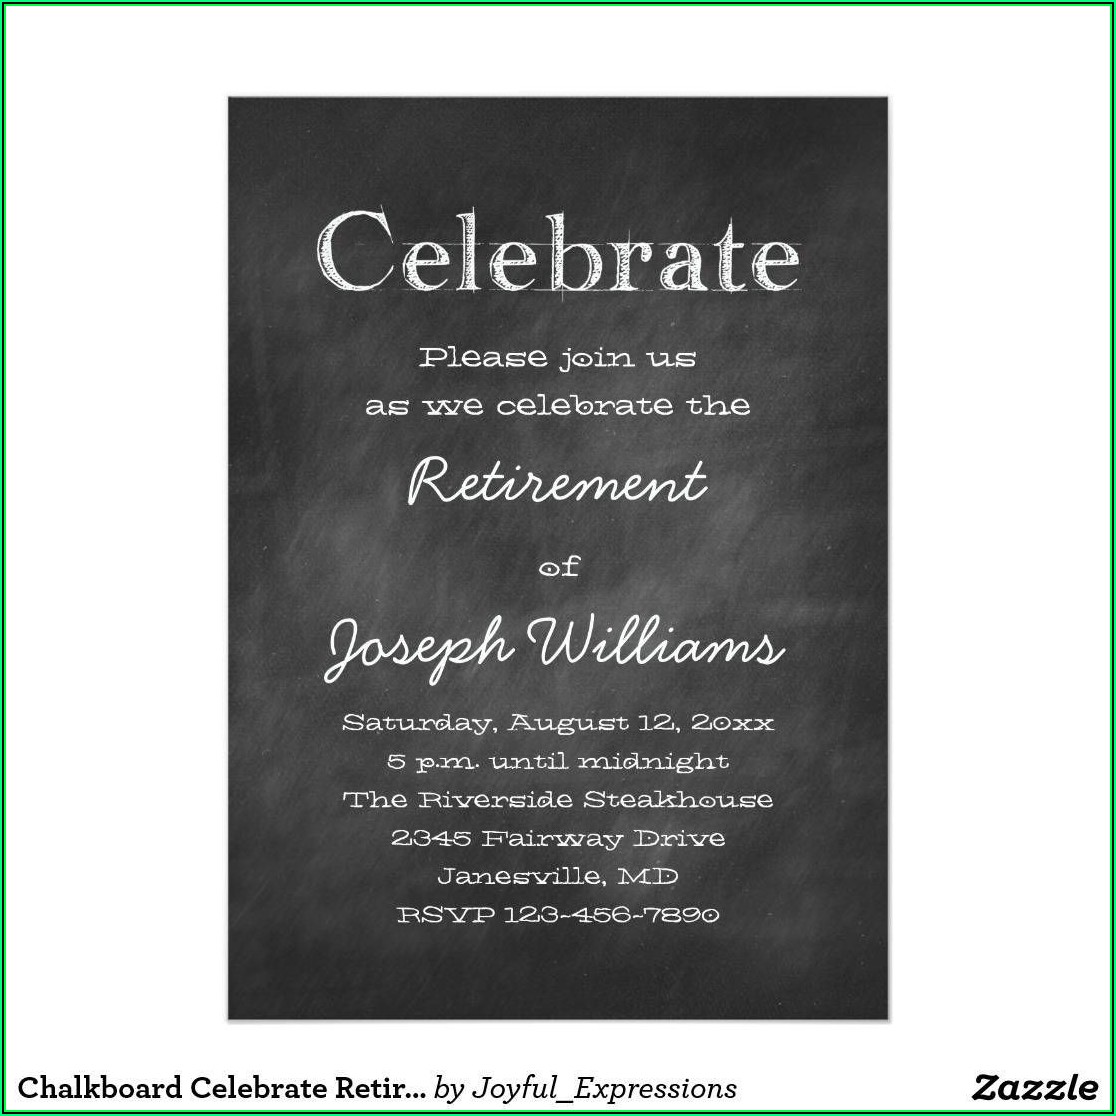 Retirement Celebration Invitation Template Free